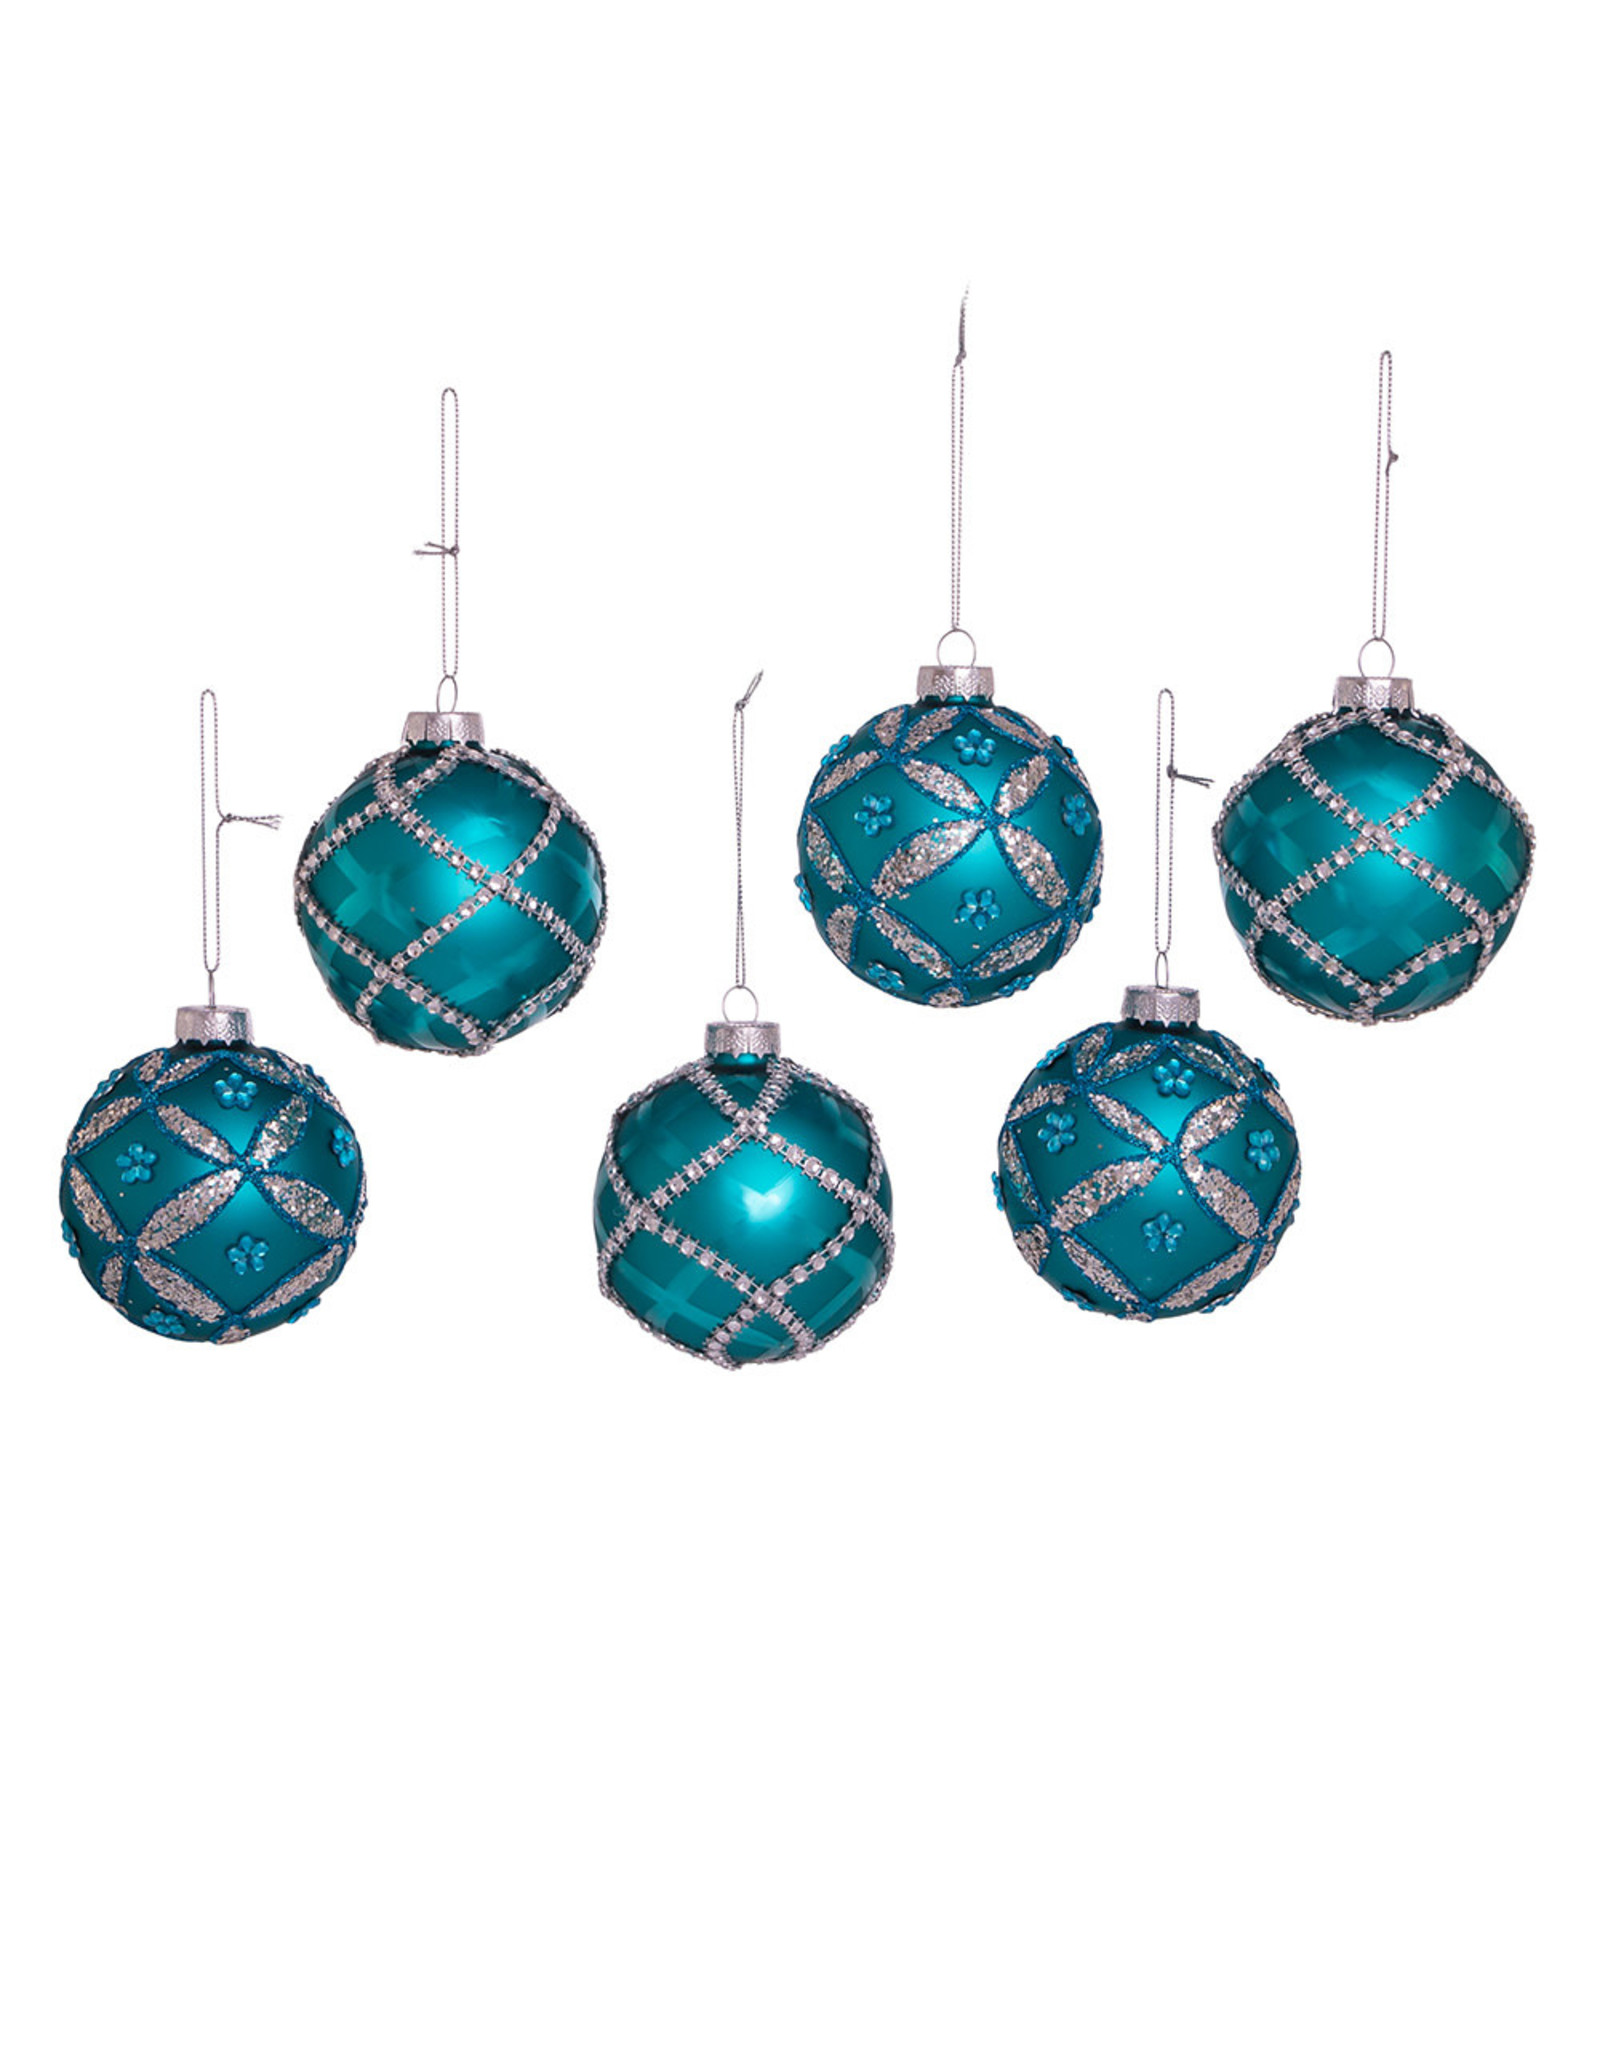 Kurt Adler Teal Glass Ball Ornaments W Embellishments Set of 6